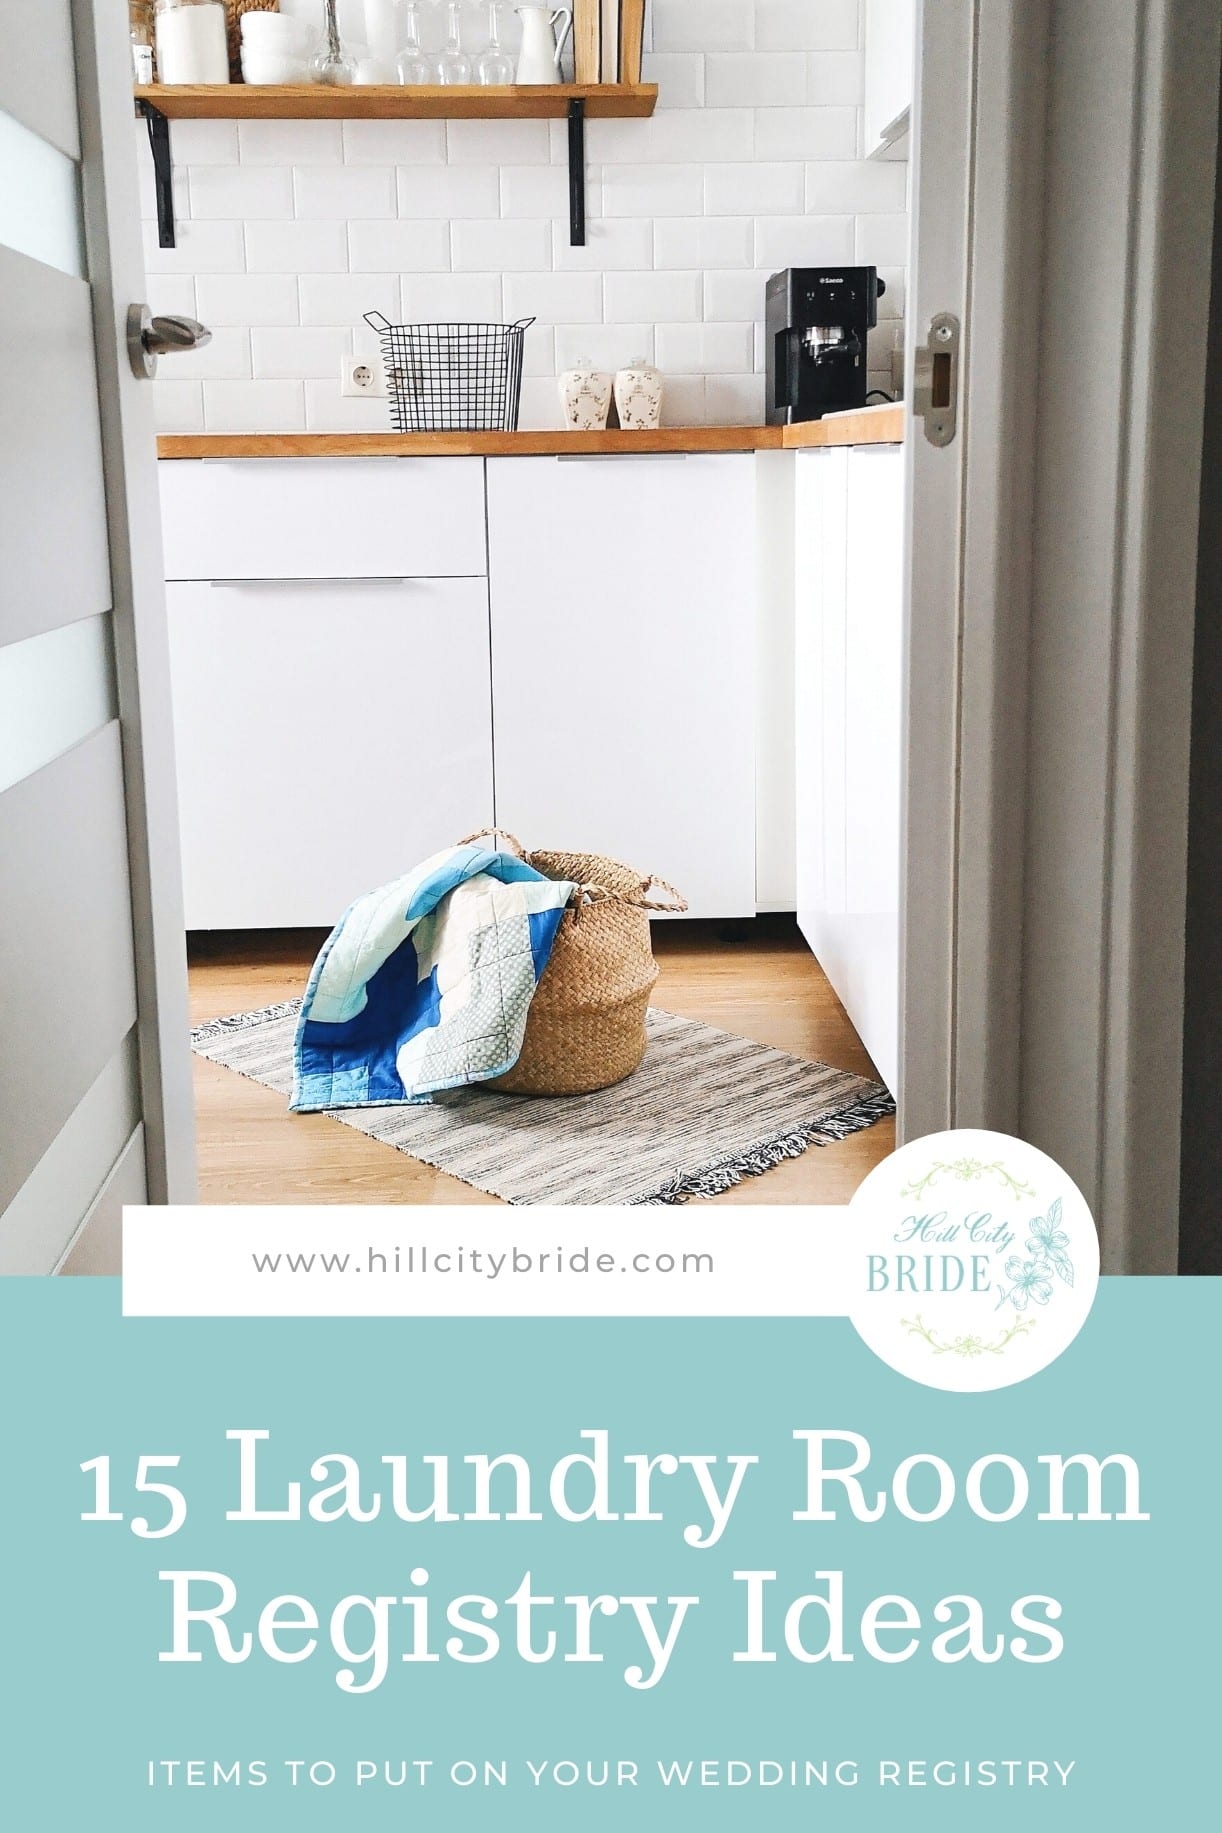 15 Popular Wedding Registry Ideas for a Modern Laundry Room